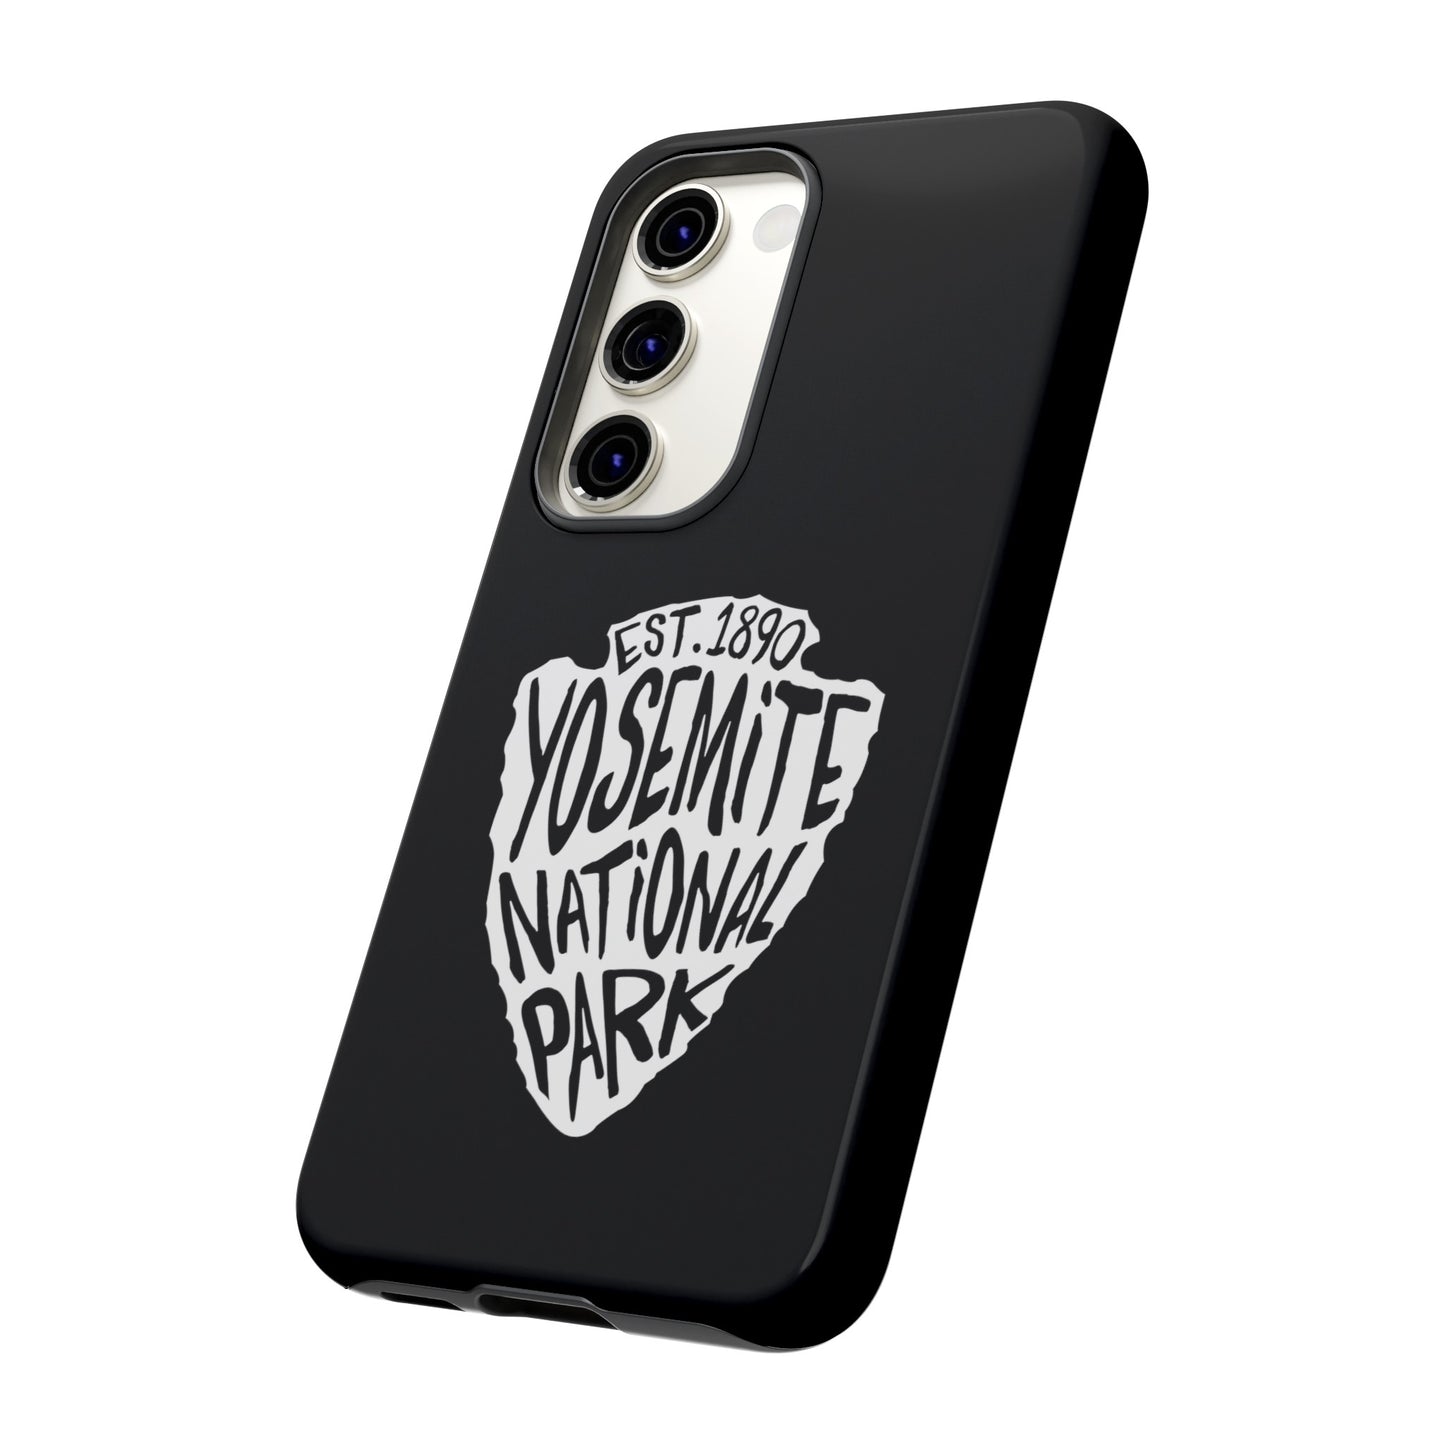 Yosemite National Park Phone Case - Arrowhead Design